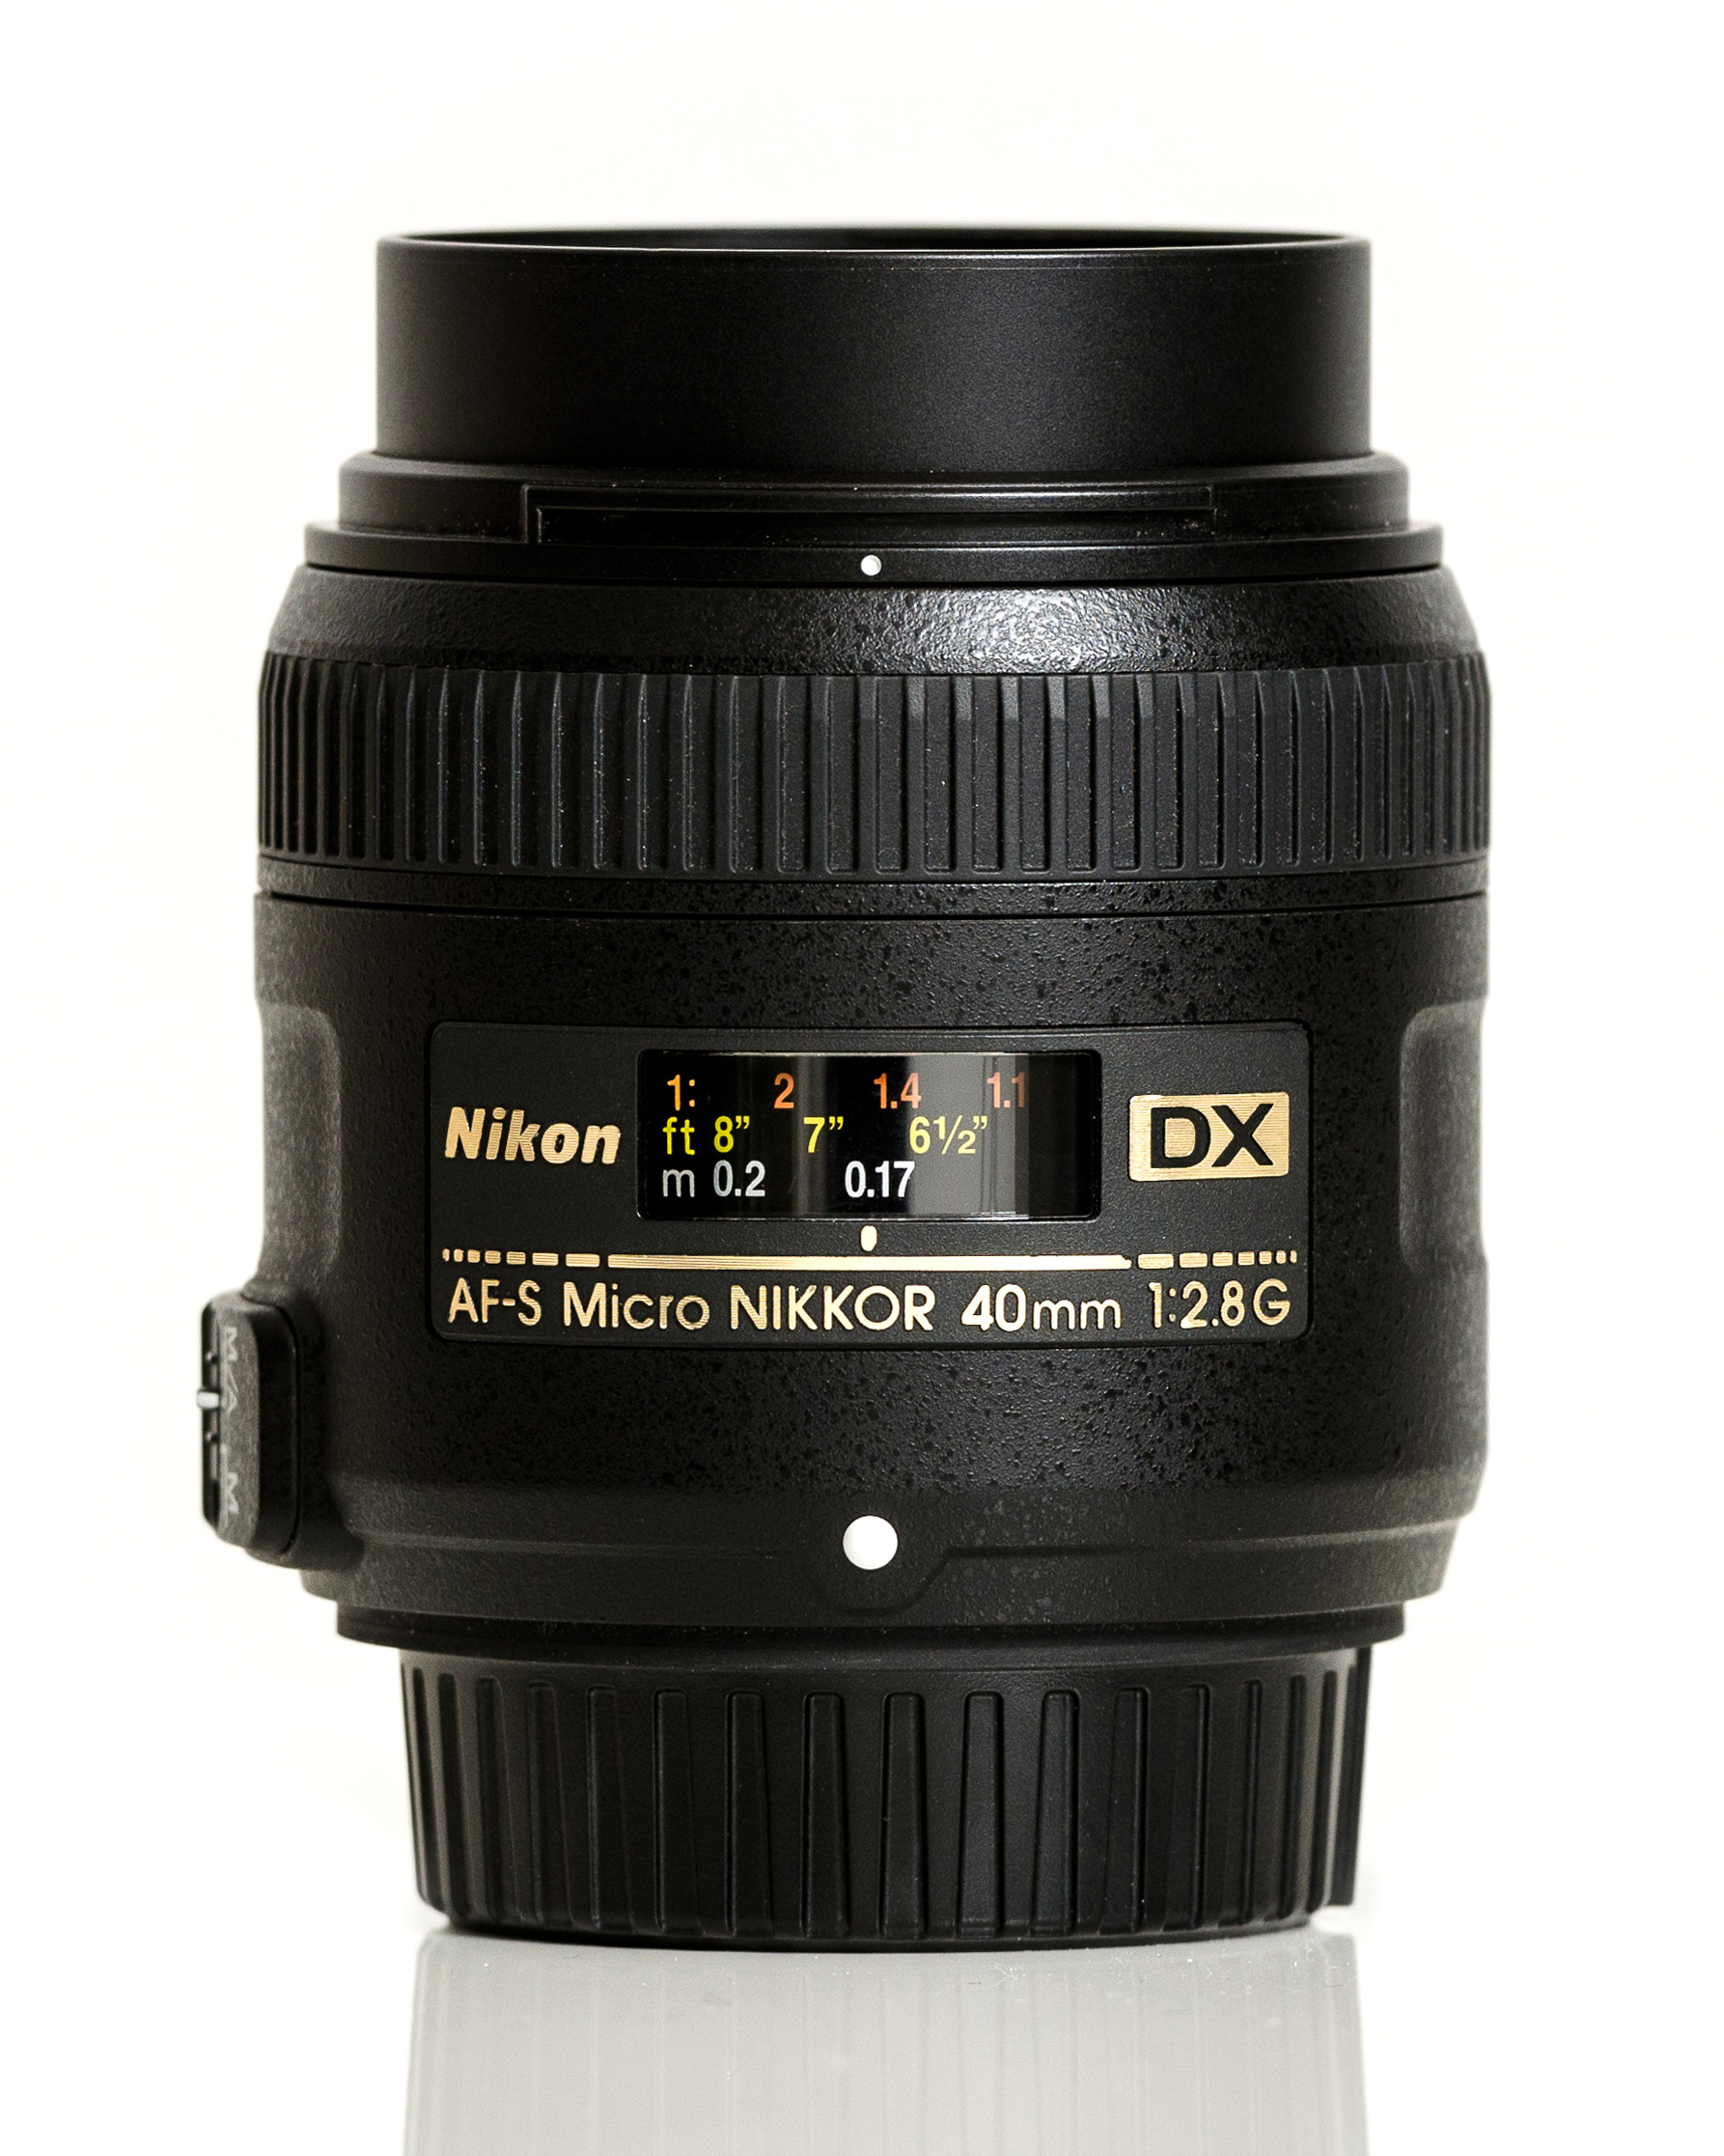 File:Nikon DX AF-S Micro Nikkor 40mm f2,8G.jpg - Wikimedia Commons